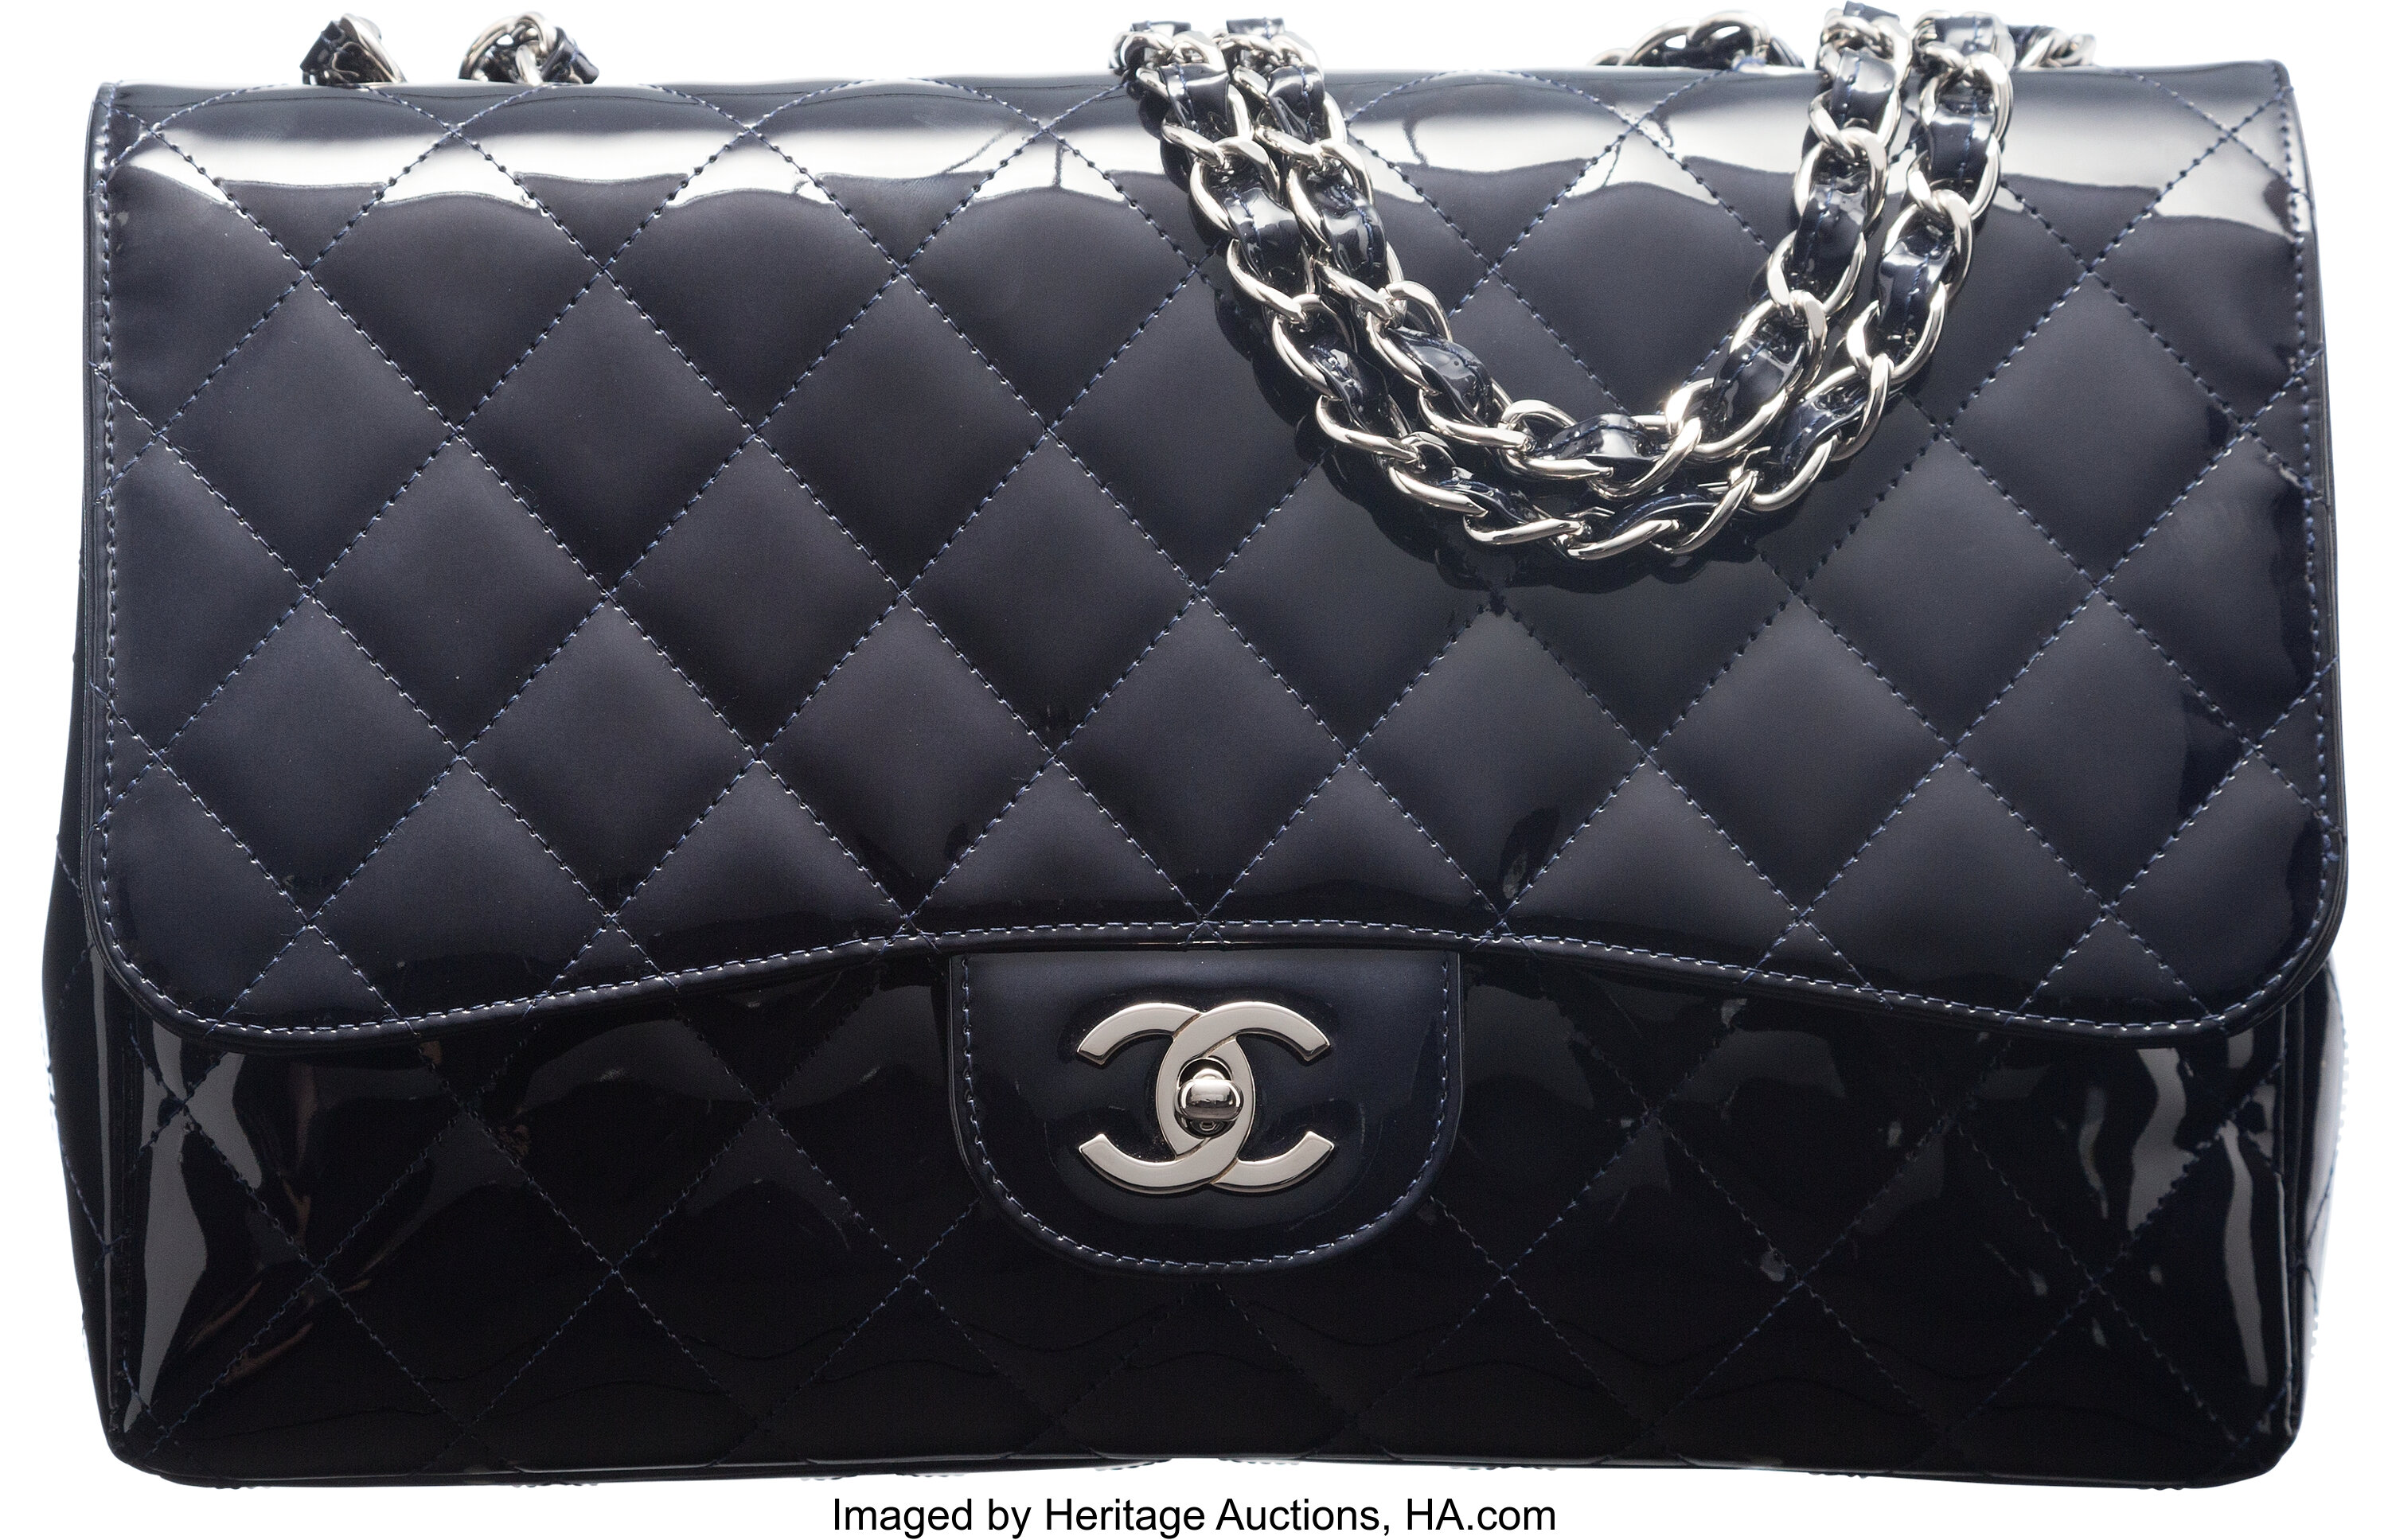 Louis Vuitton flagship launch + Chanel Mobile Art w Karl Lagerfeld